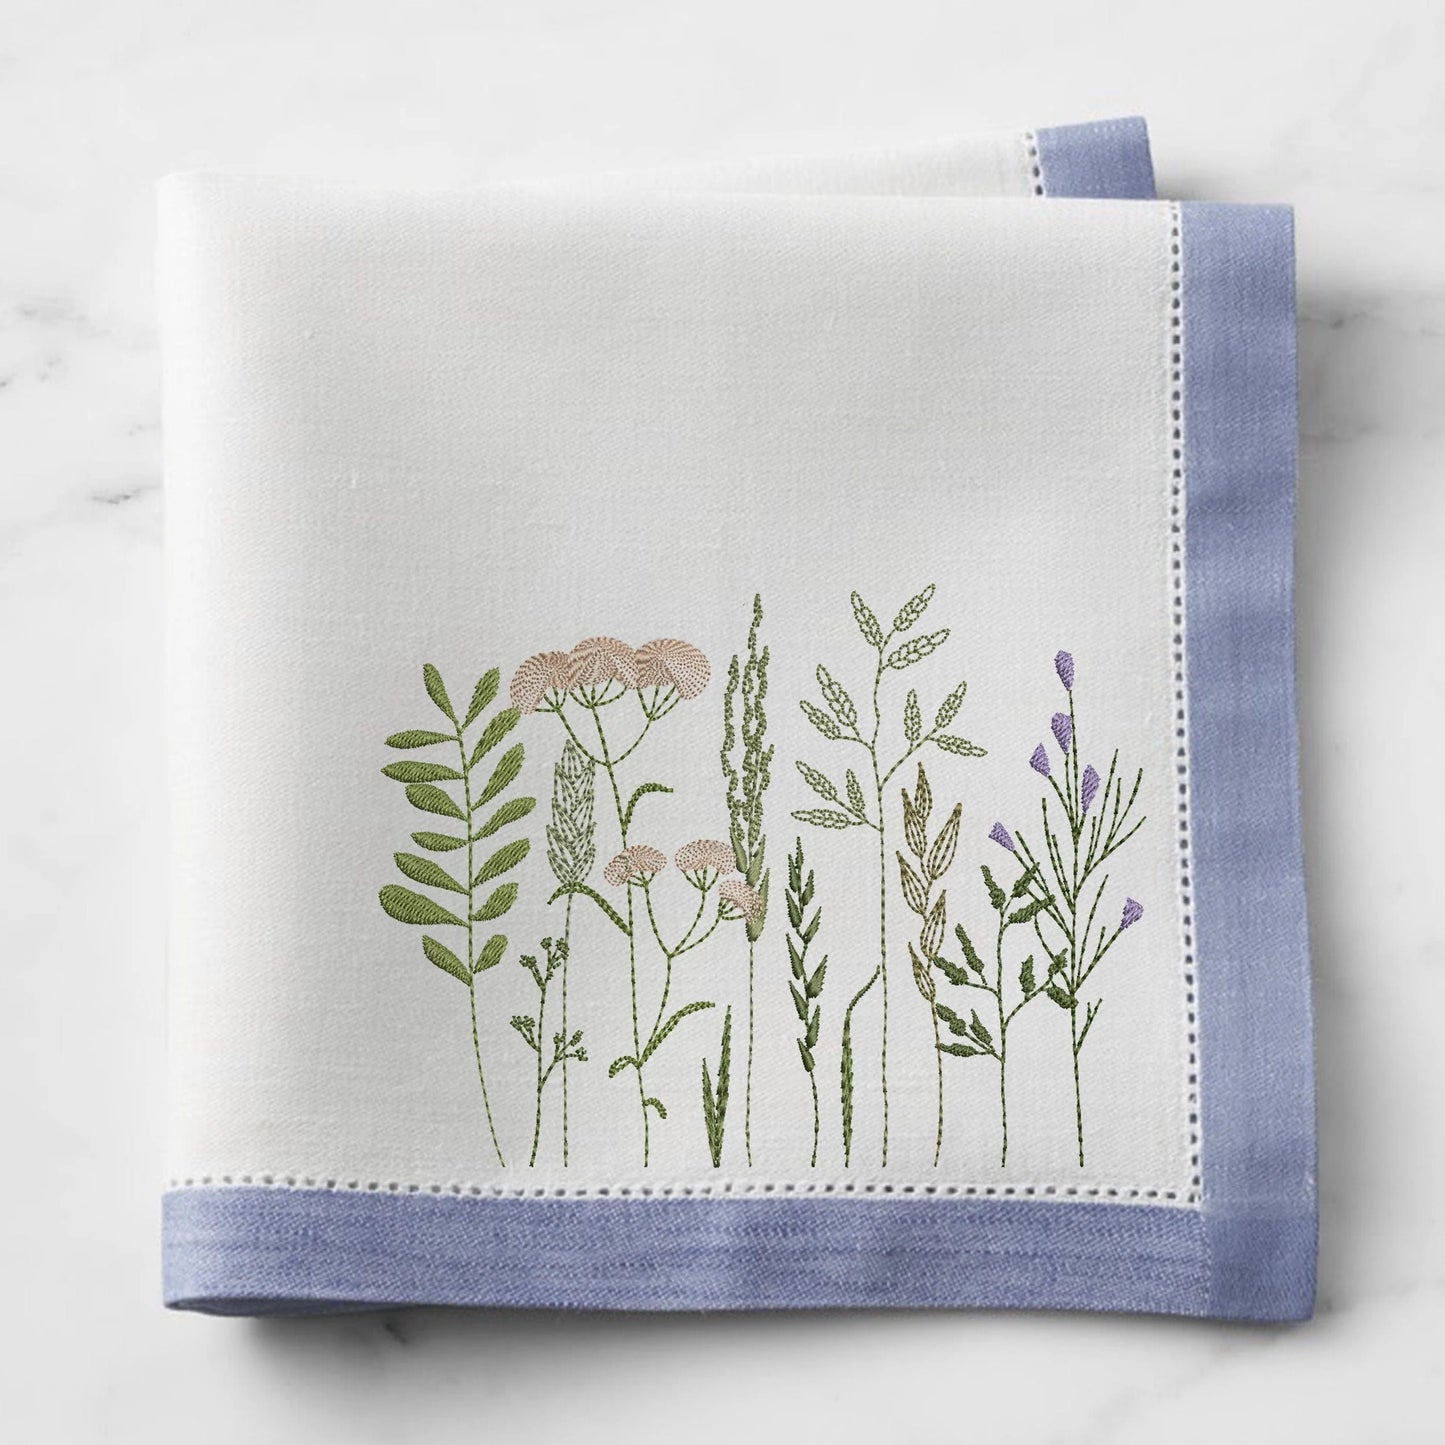 Meadow wildflower machine embroidery design set on napkin